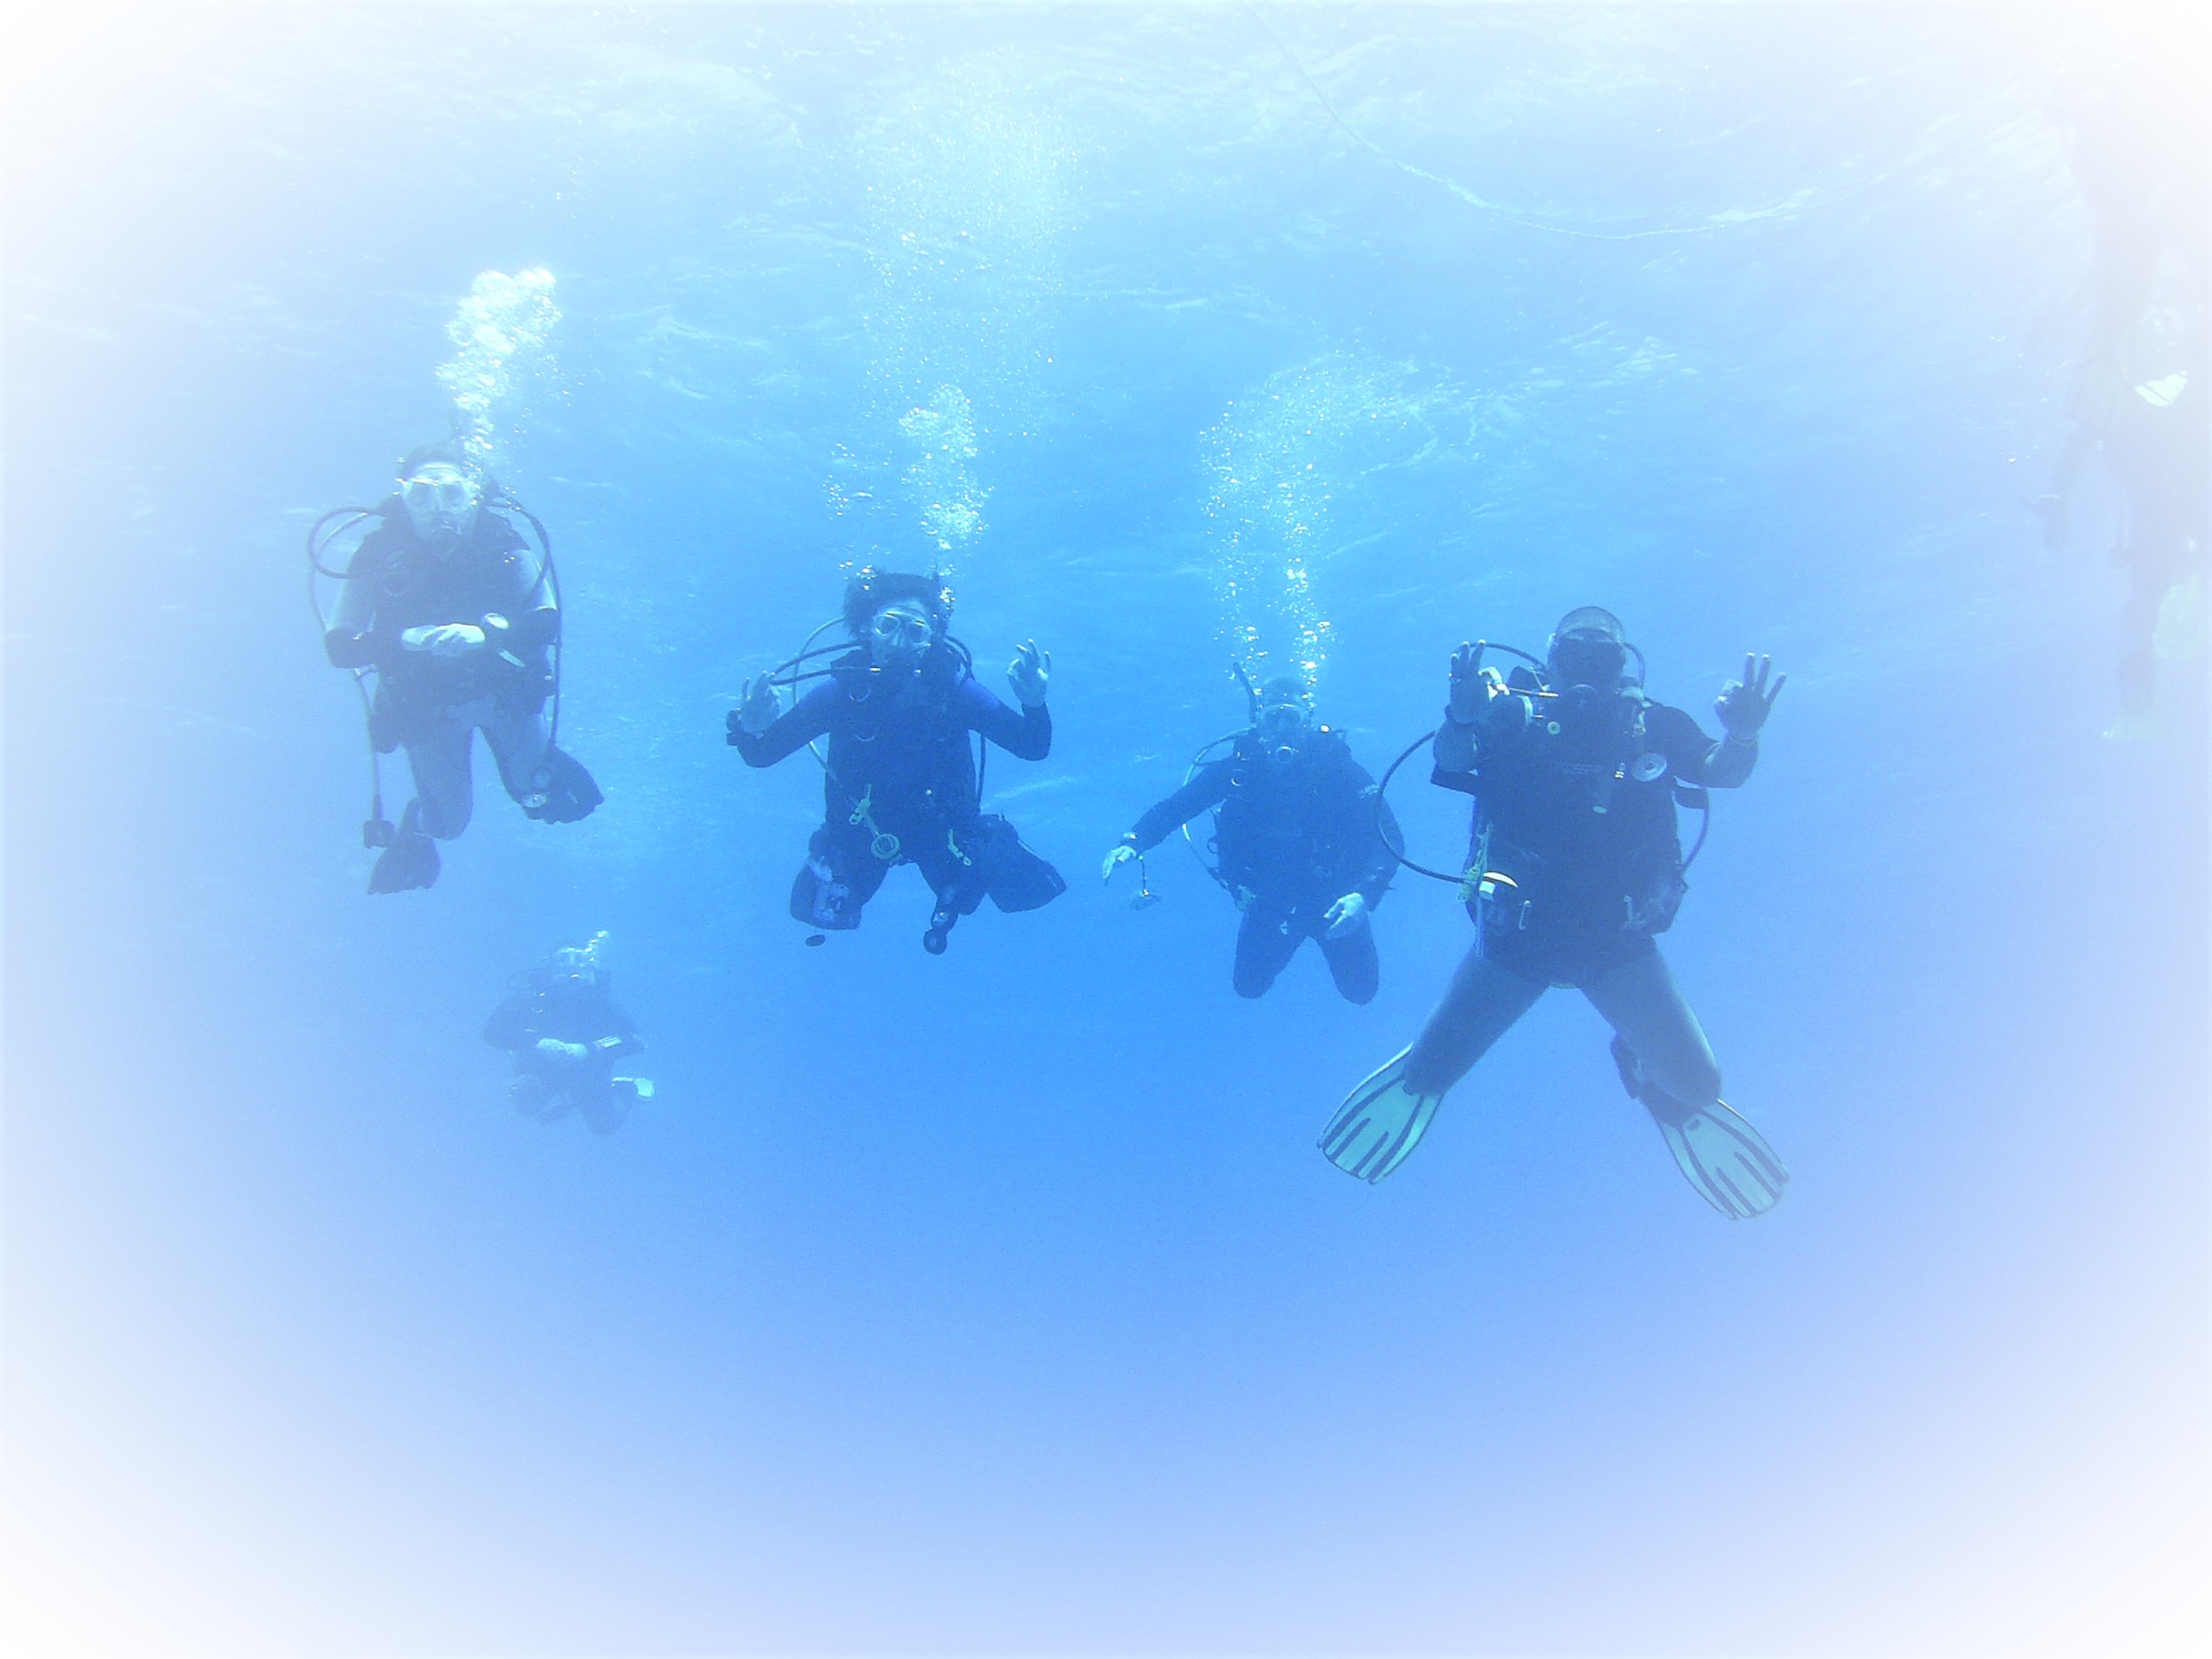 Advanced Diver Course